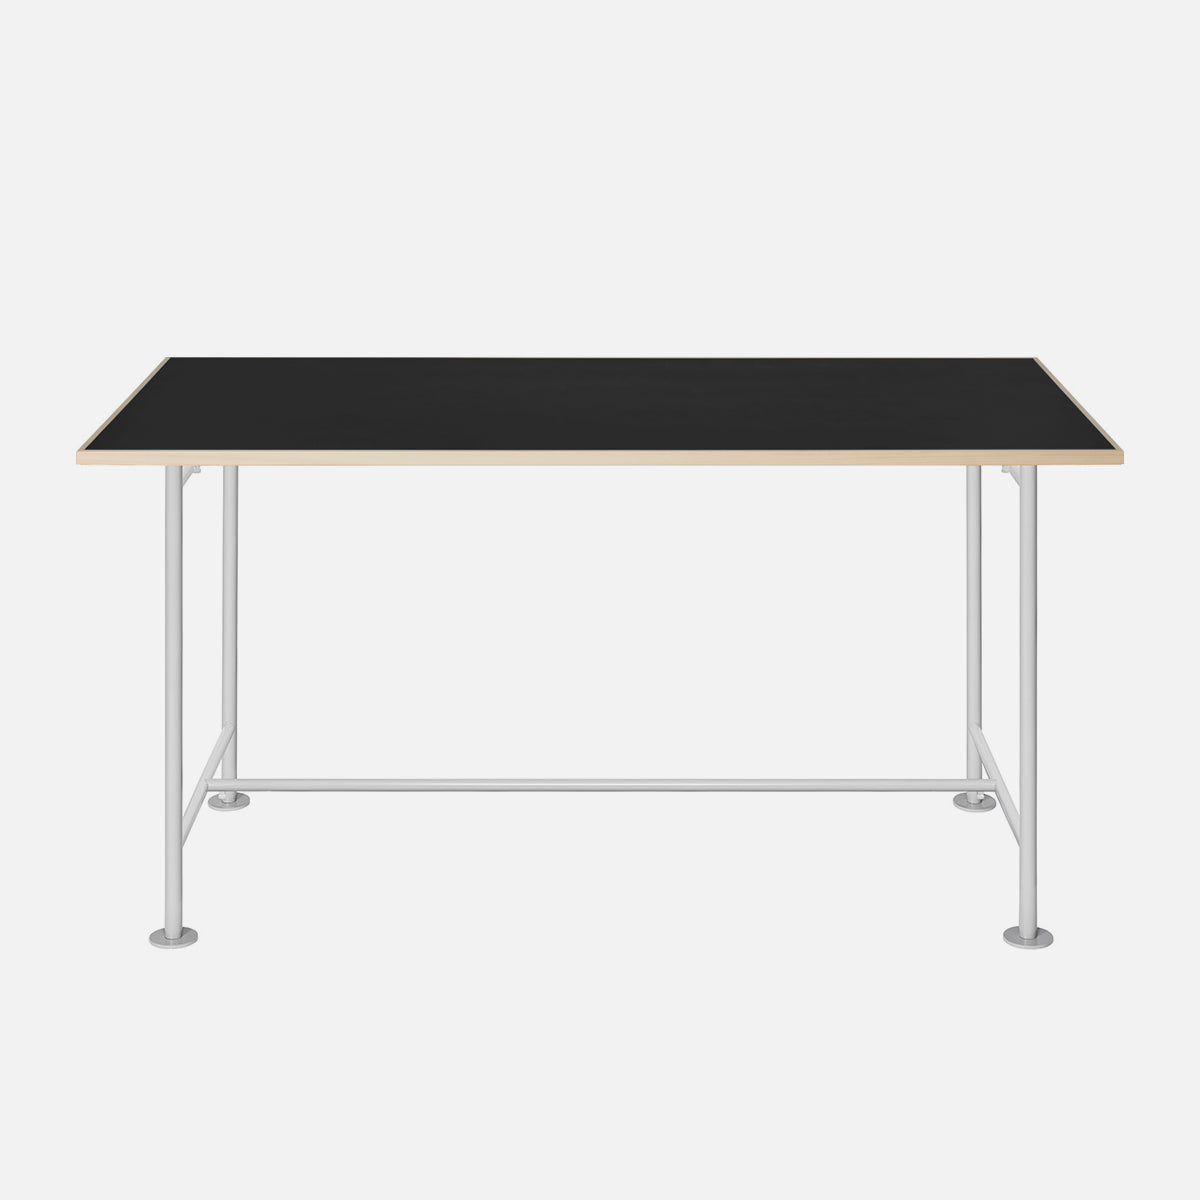 KIT Table TBL-01 BKLG　WORK TABLE  ミーティングテーブル  ワークテーブル